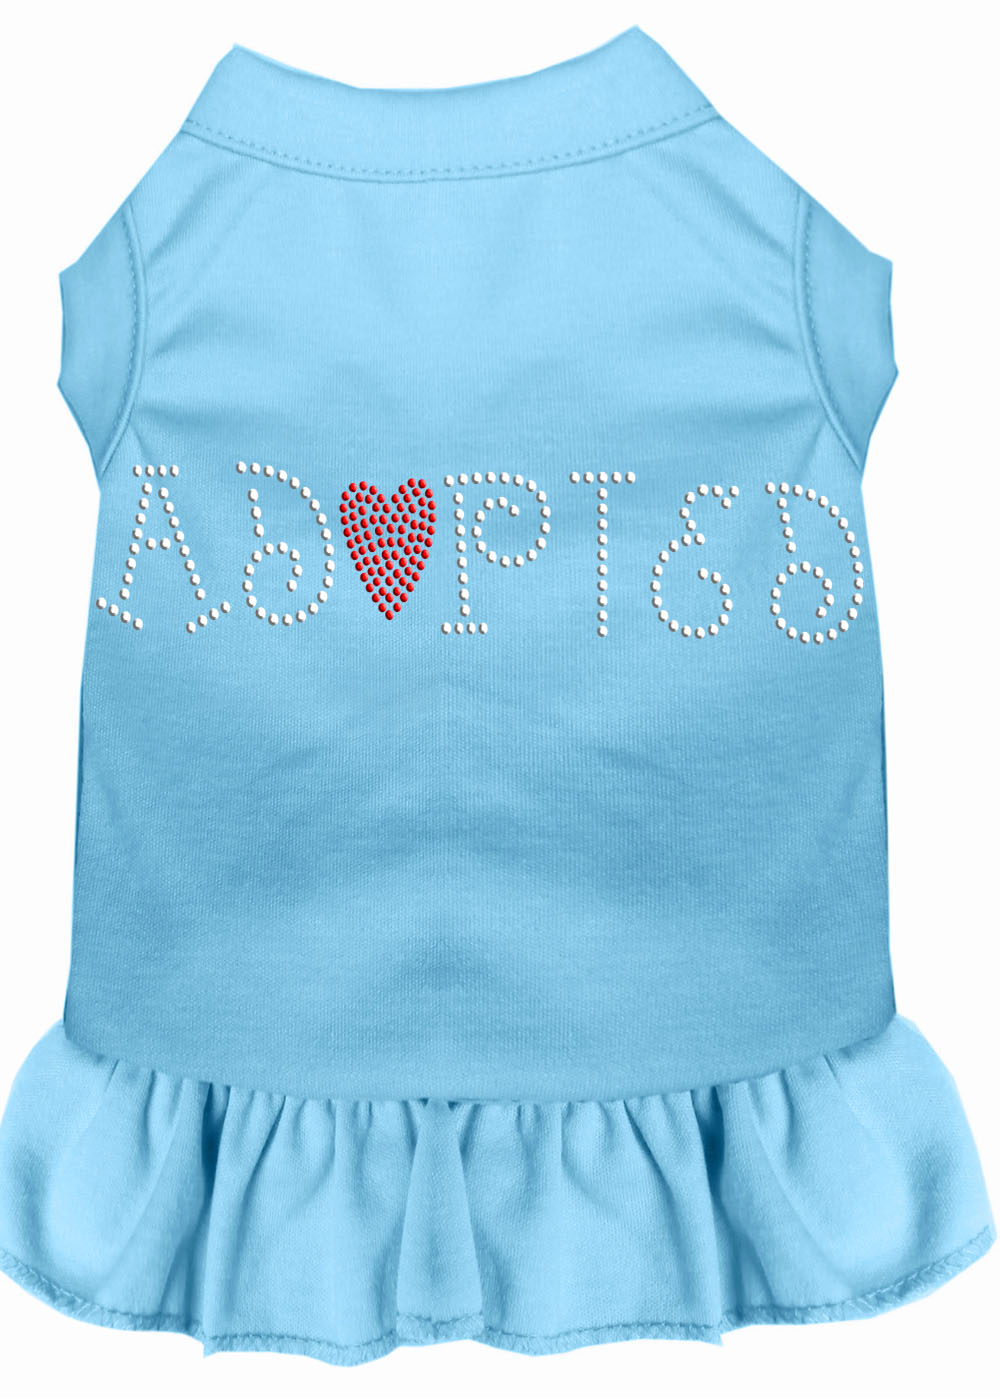 Adopted Rhinestone Dress Baby Blue XXXL